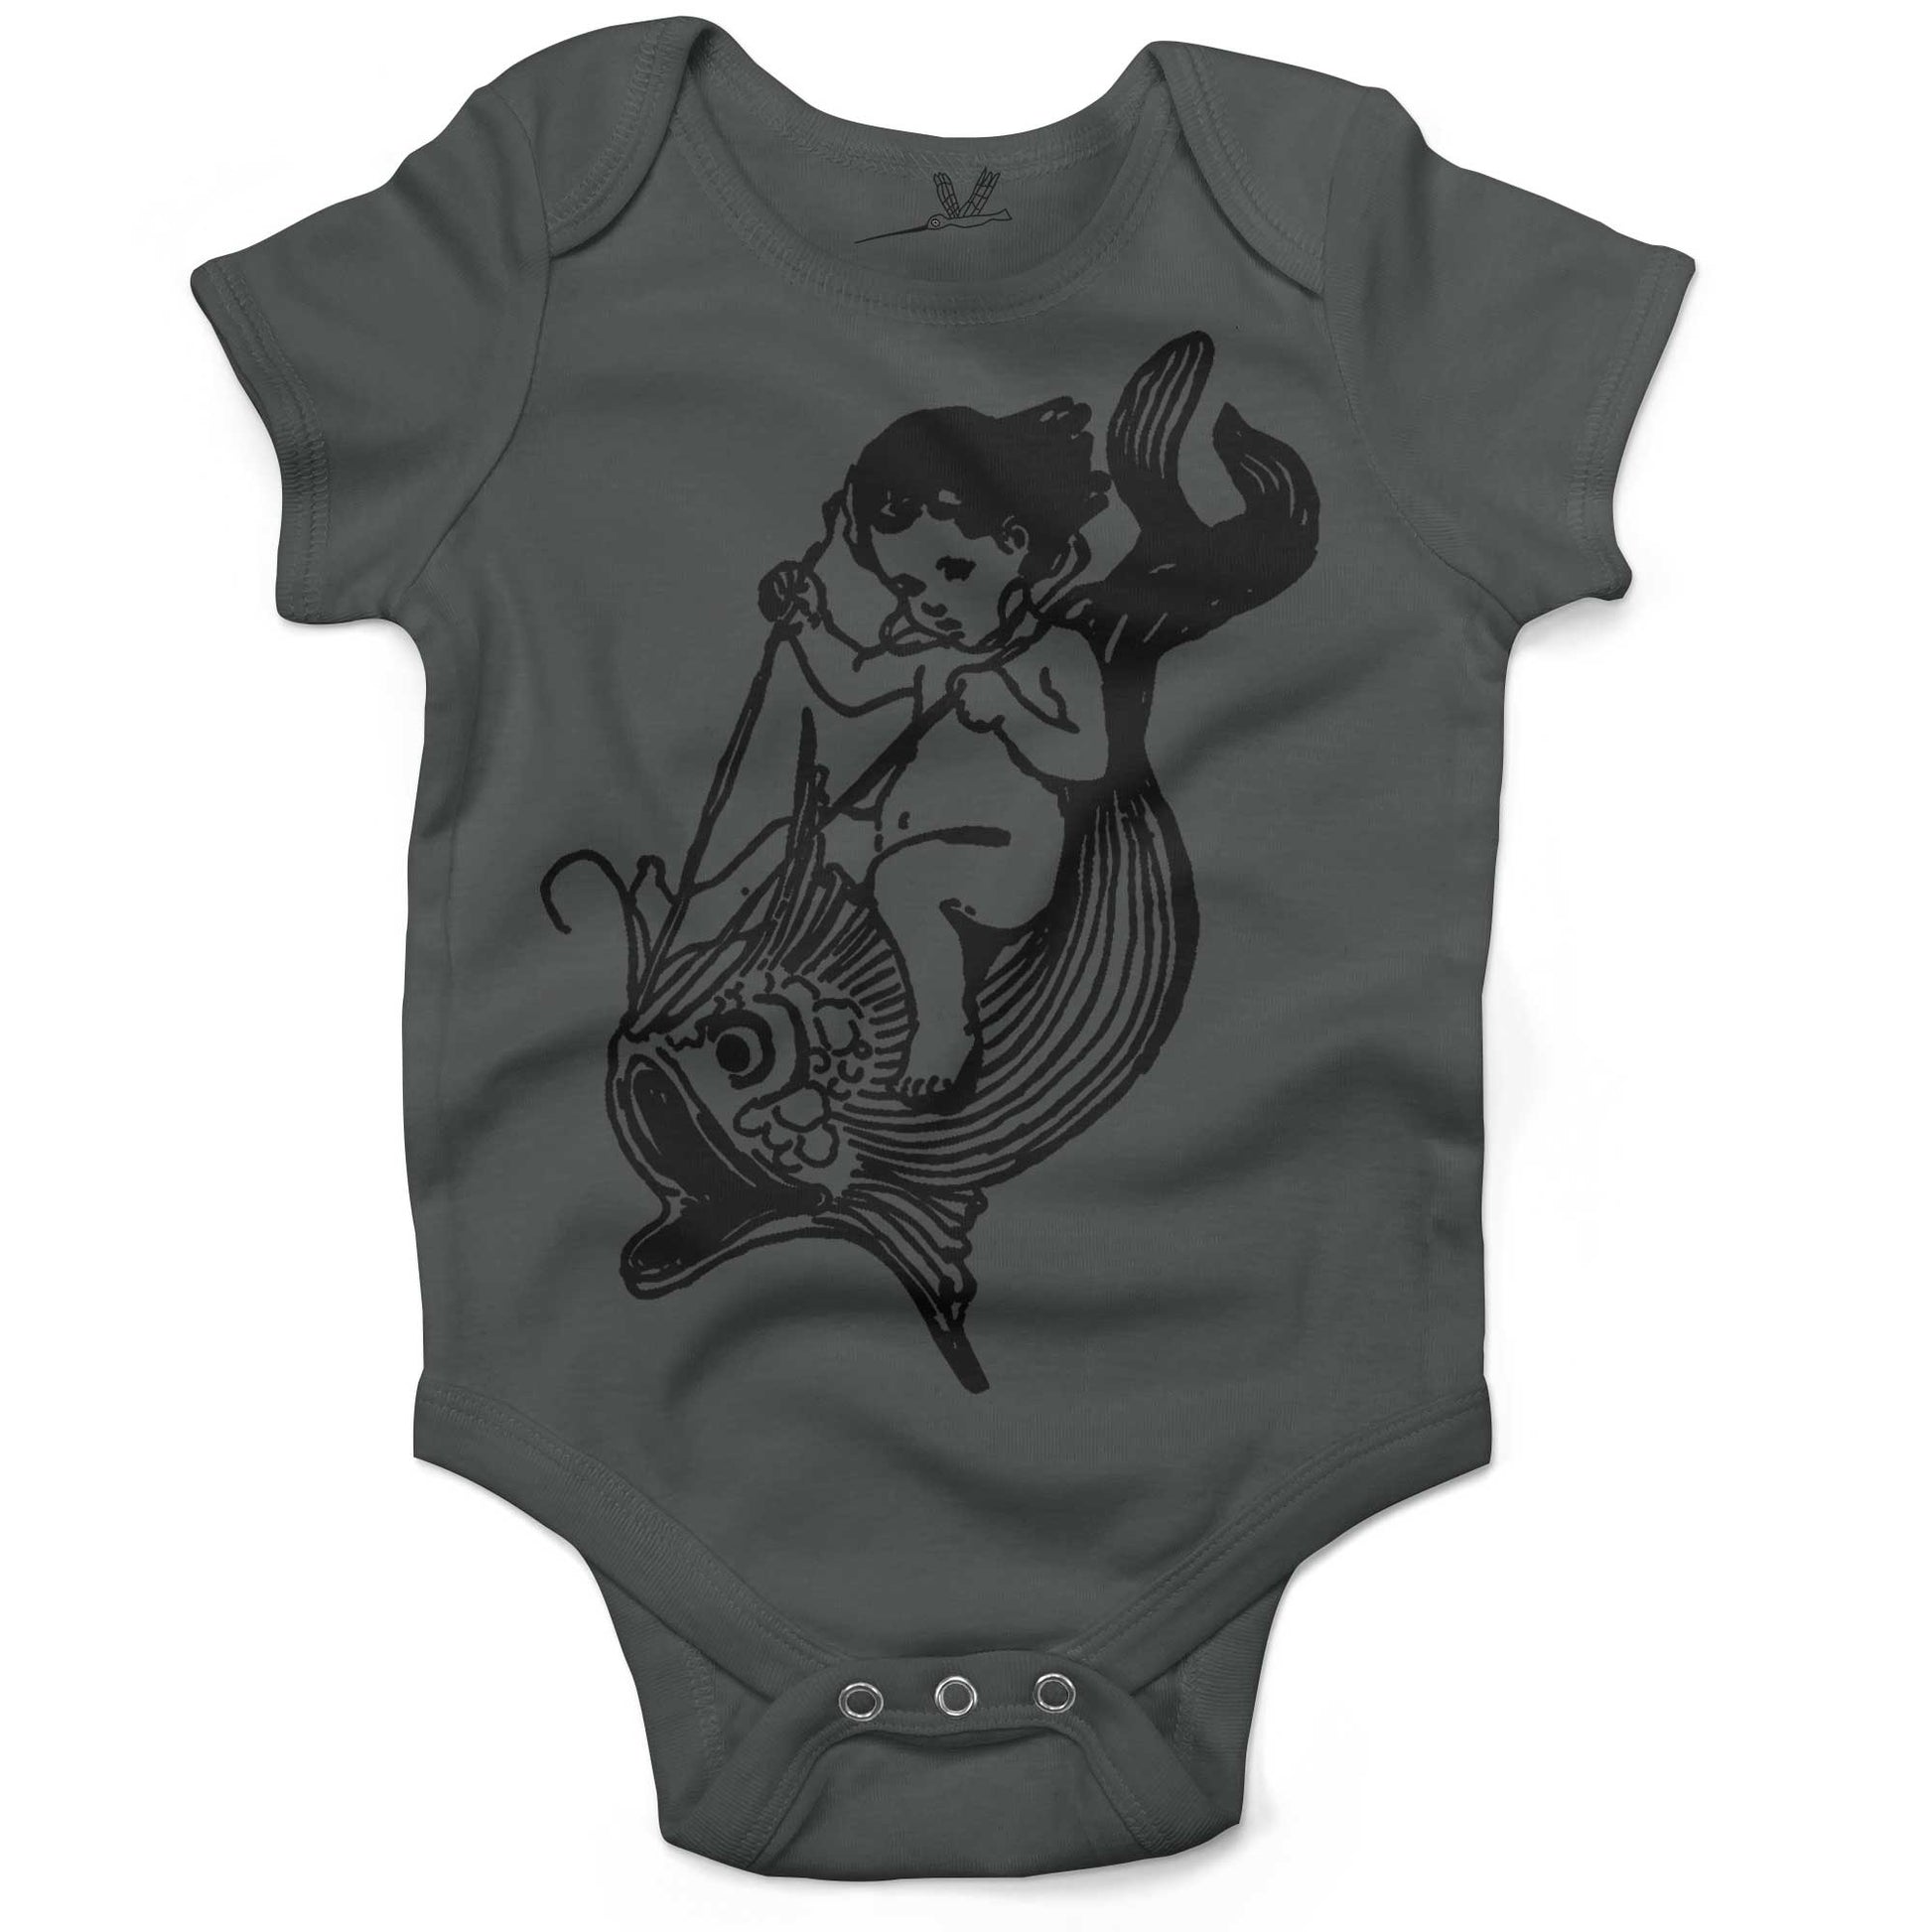 Water Baby Riding A Giant Fish Infant Bodysuit or Raglan Tee-Organic Asphalt-3-6 months